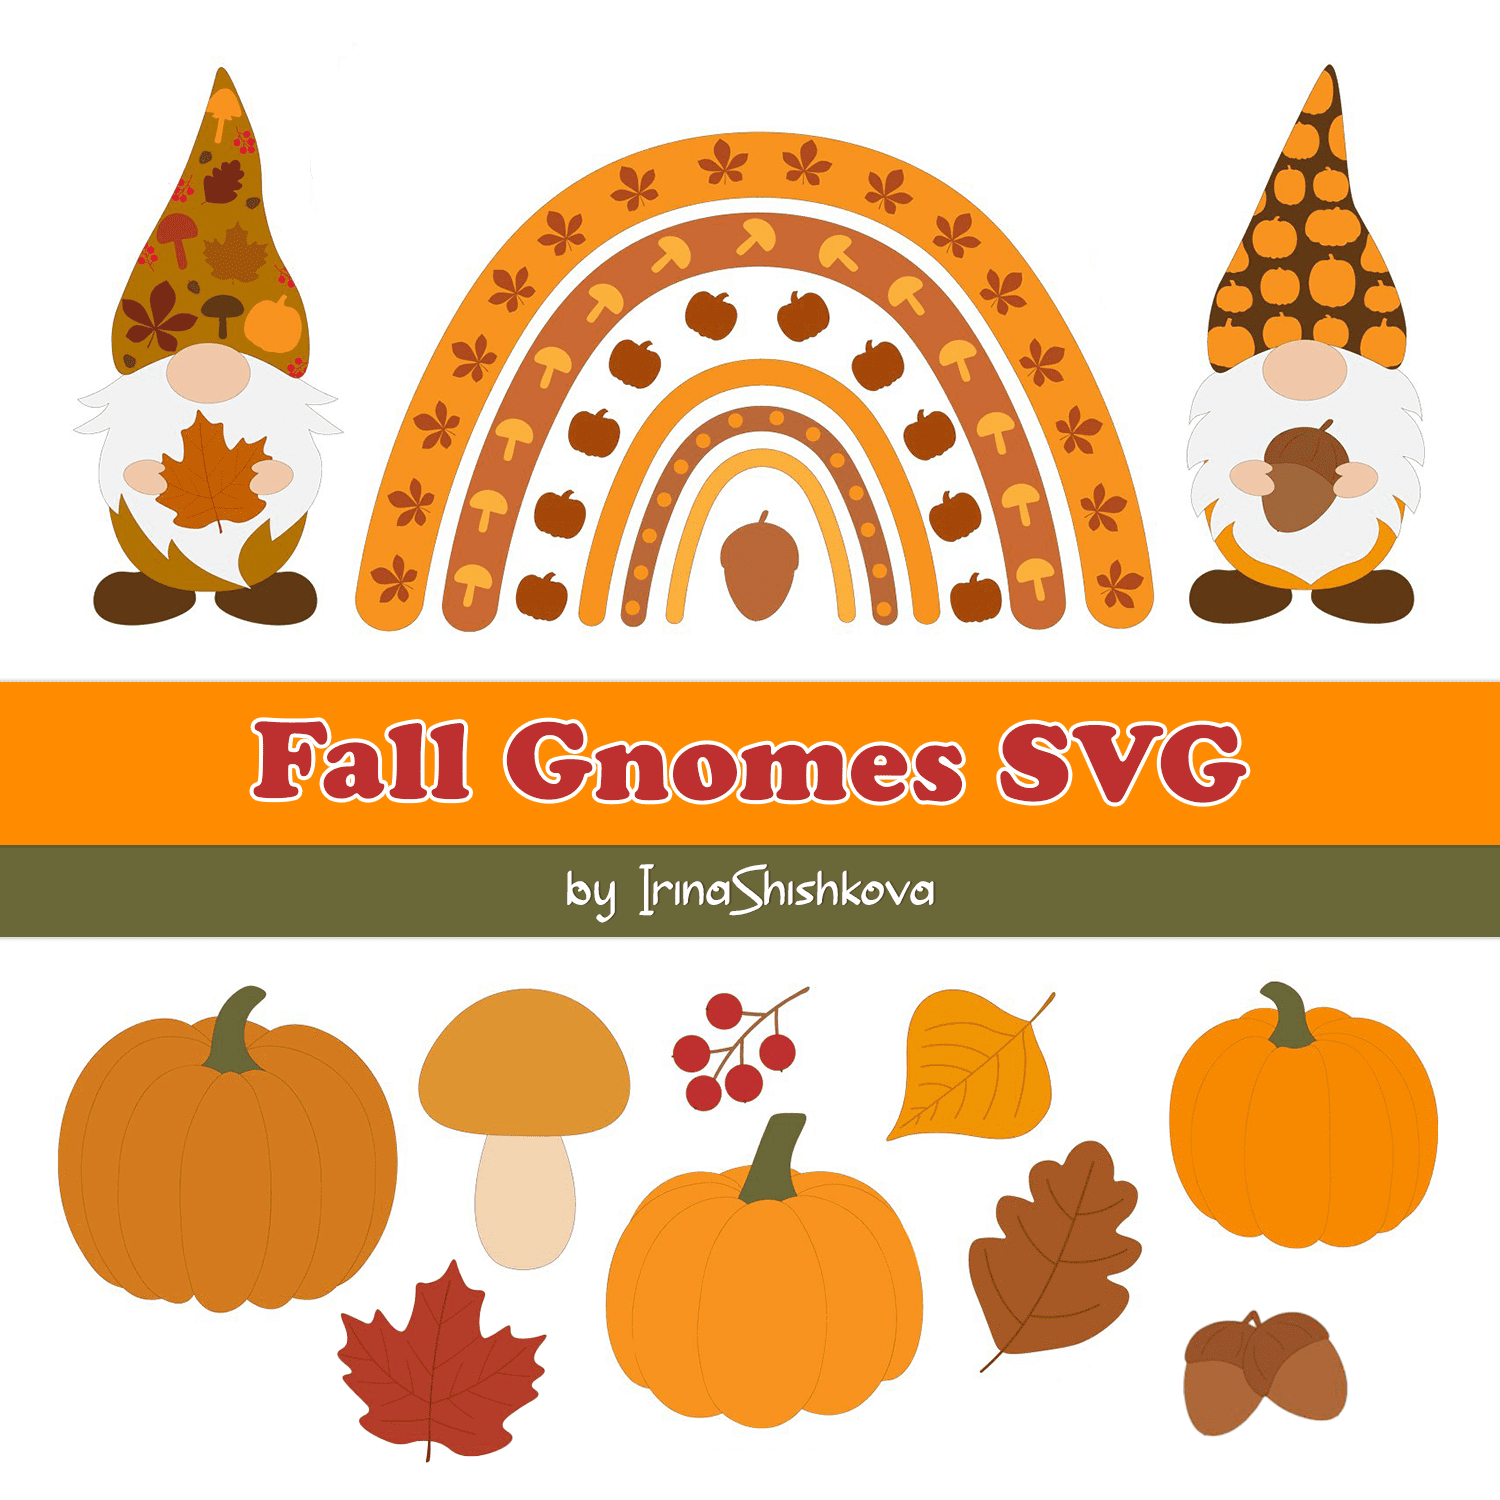 Fall Gnomes SVG. Rainbow Gnomes. cover.